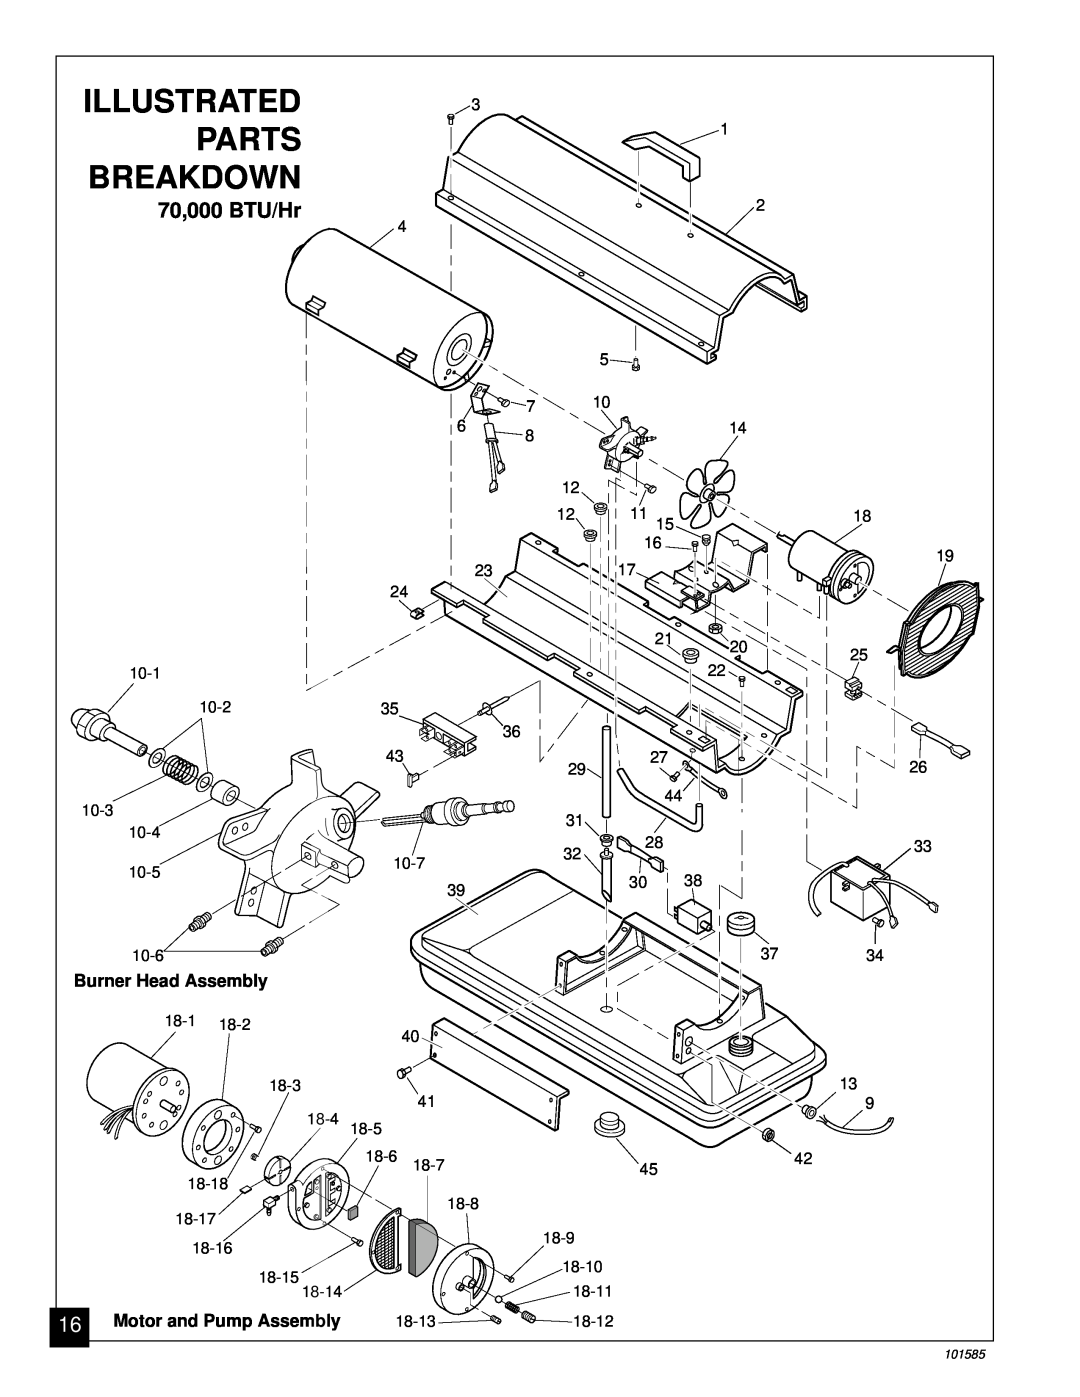 Master Lock 70000 BTU/Hr Parts, Breakdown, Illustrated, 70,000 BTU/Hr, Burner Head Assembly, Motor and Pump Assembly 